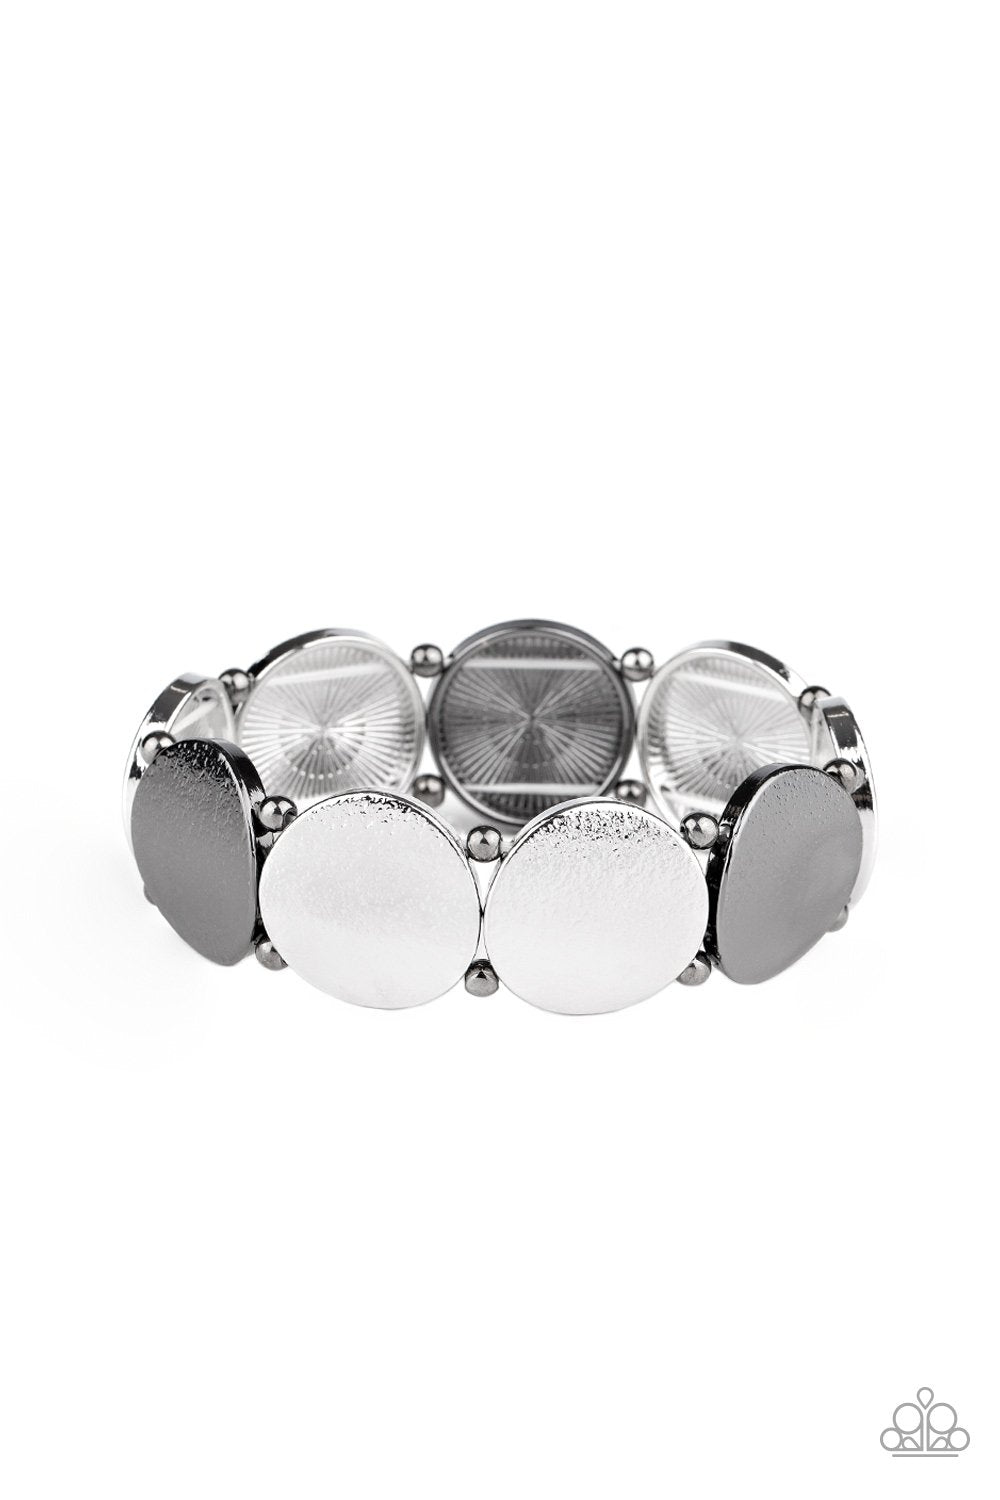 Metallic Spotlight Multi Gunmetal and Silver Stretch Bracelet - Paparazzi Accessories-CarasShop.com - $5 Jewelry by Cara Jewels